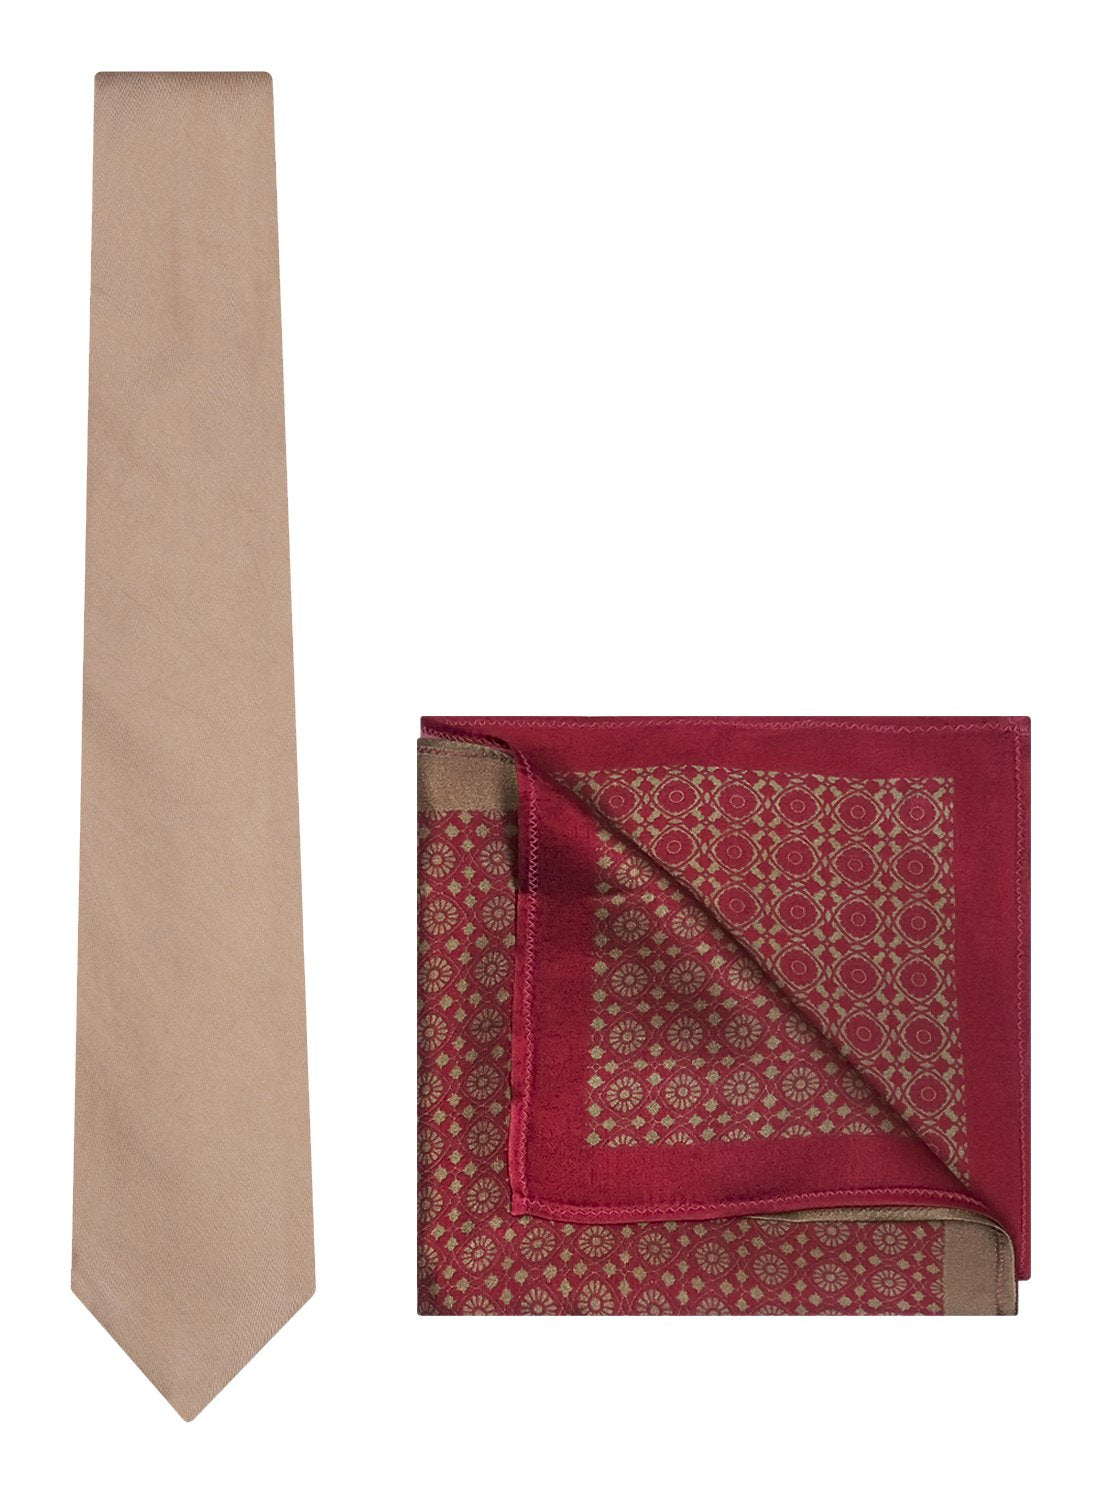 Chokore Beige color Plain Silk Tie & Wine Pink & Beige silk pocket square set